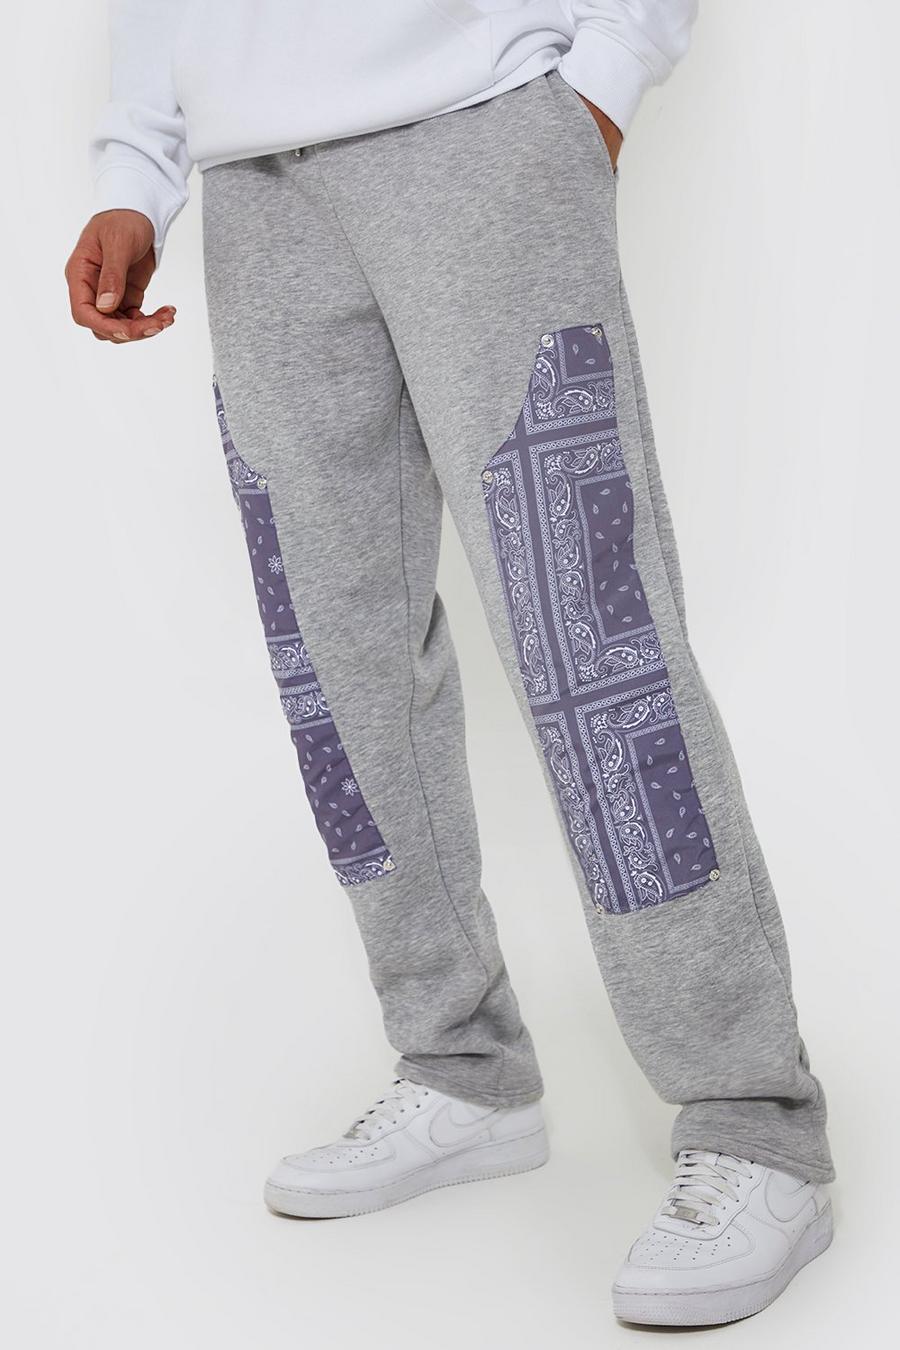 Grey grigio מכנסי ריצה עם הדפס בנדנה ופאנל בסגנון מכנסי פועלים, לגברים גבוהים